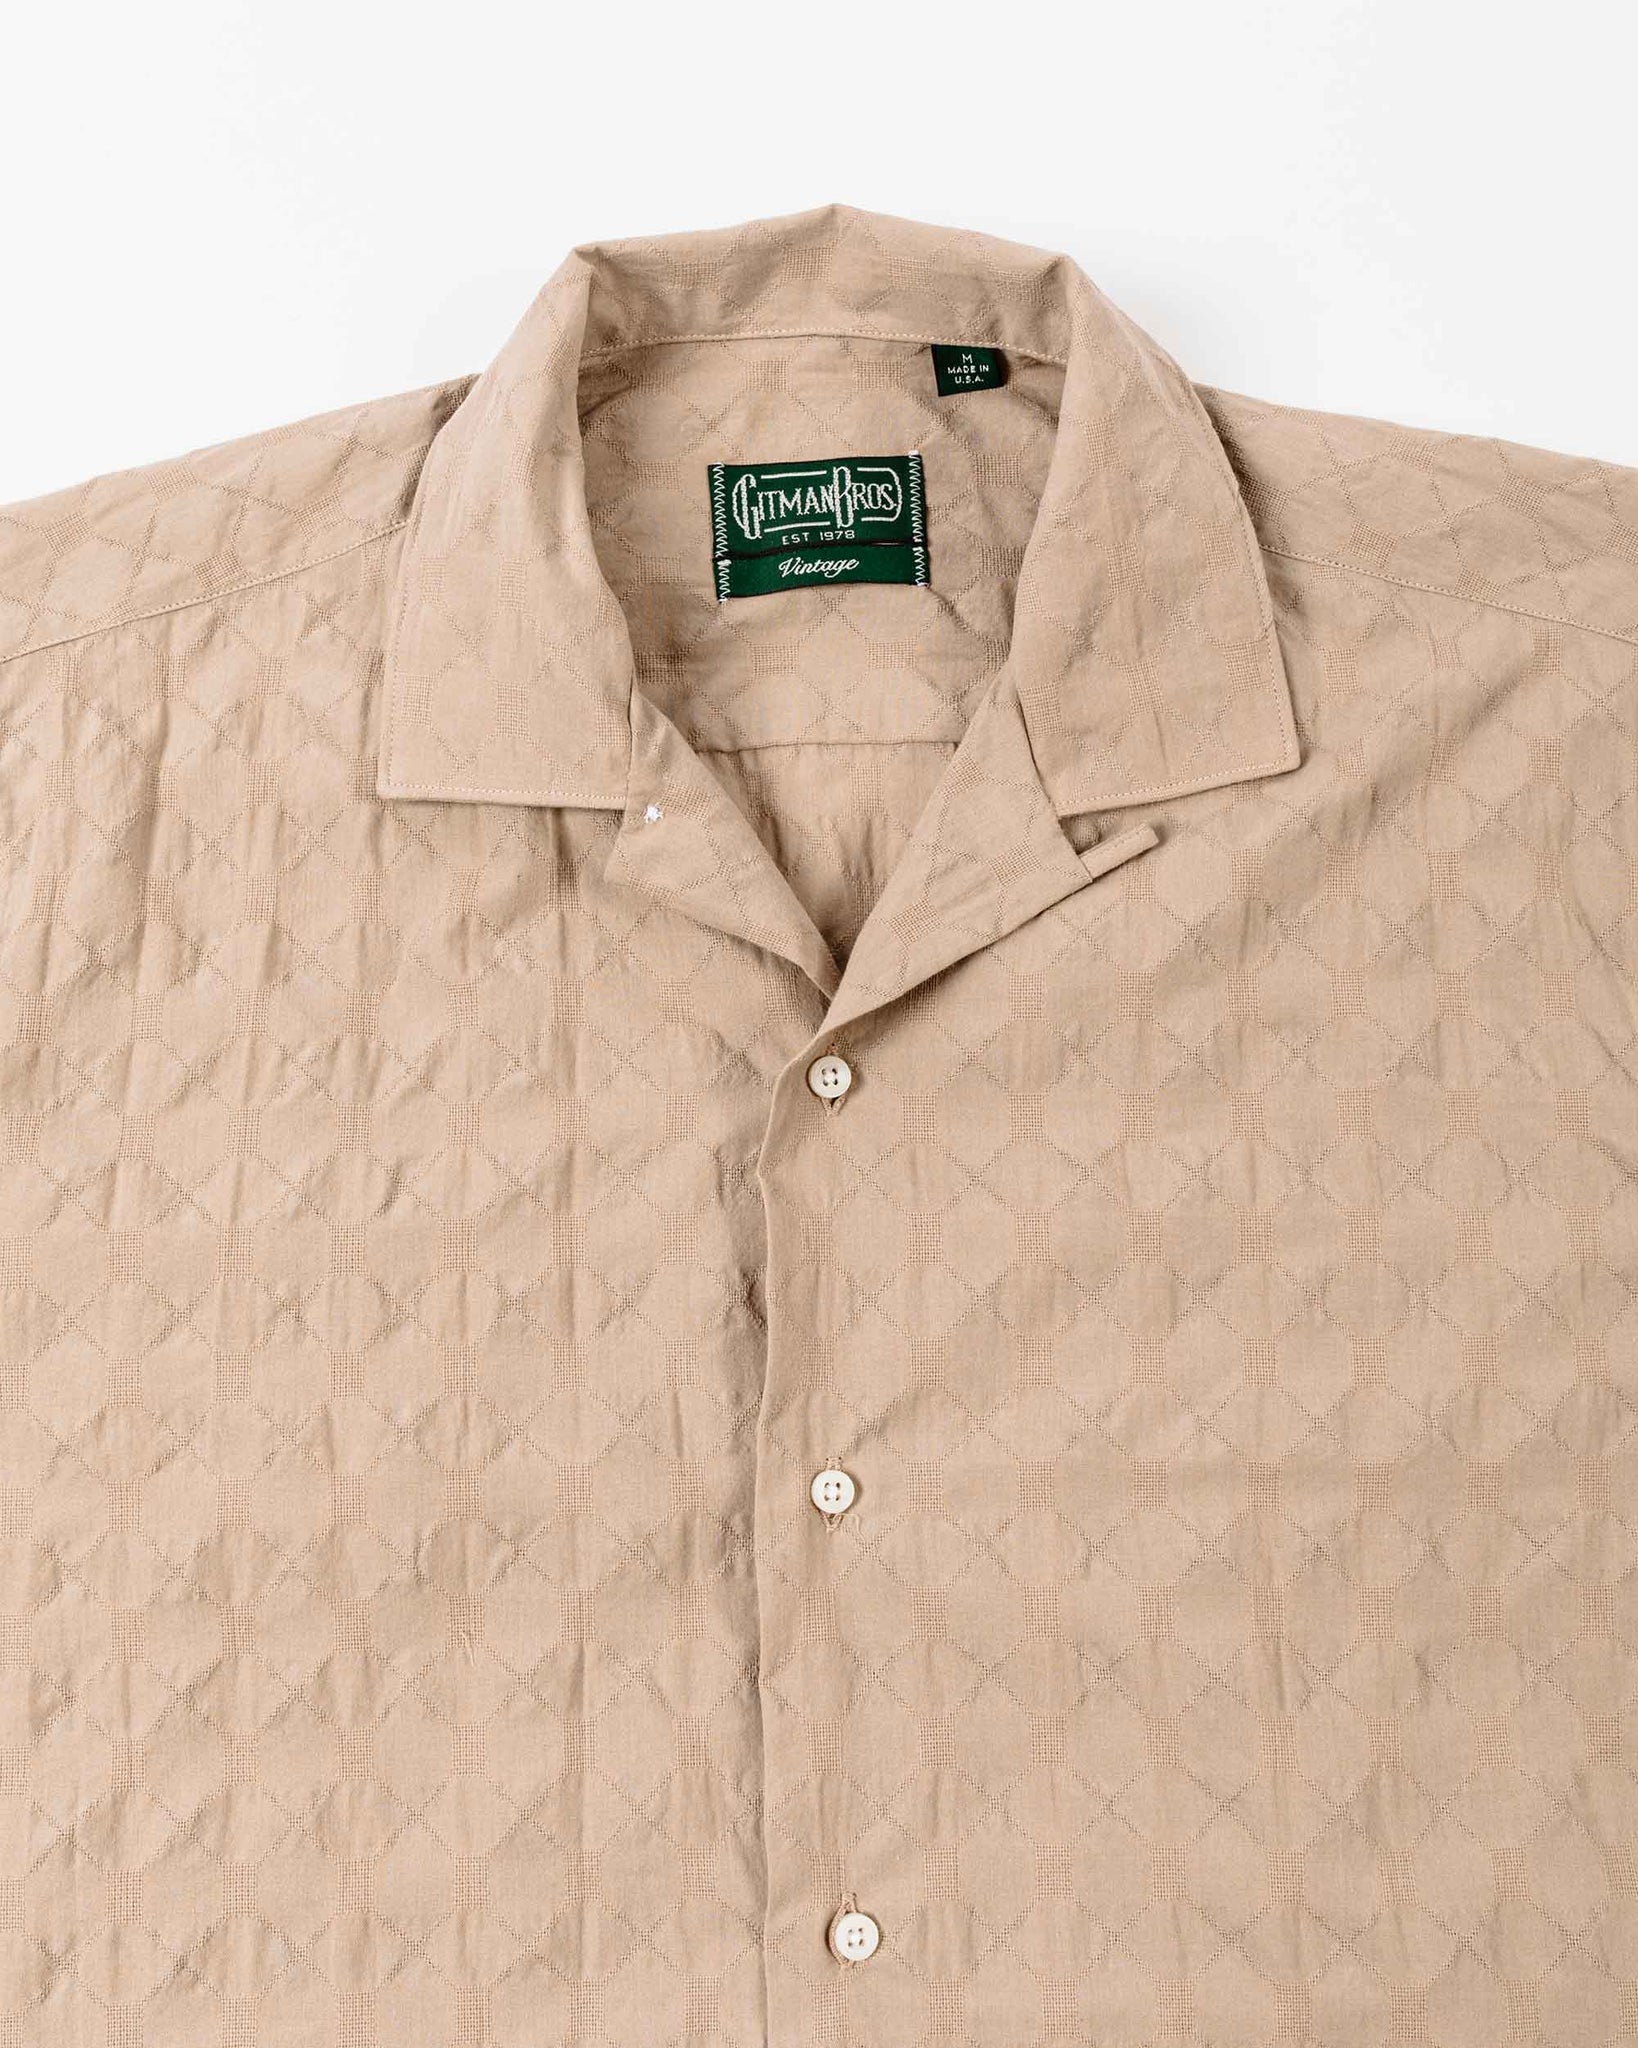 Gitman Vintage Bros. Tan Japanese Ripple Jacquard Camp Collar Shirt Details